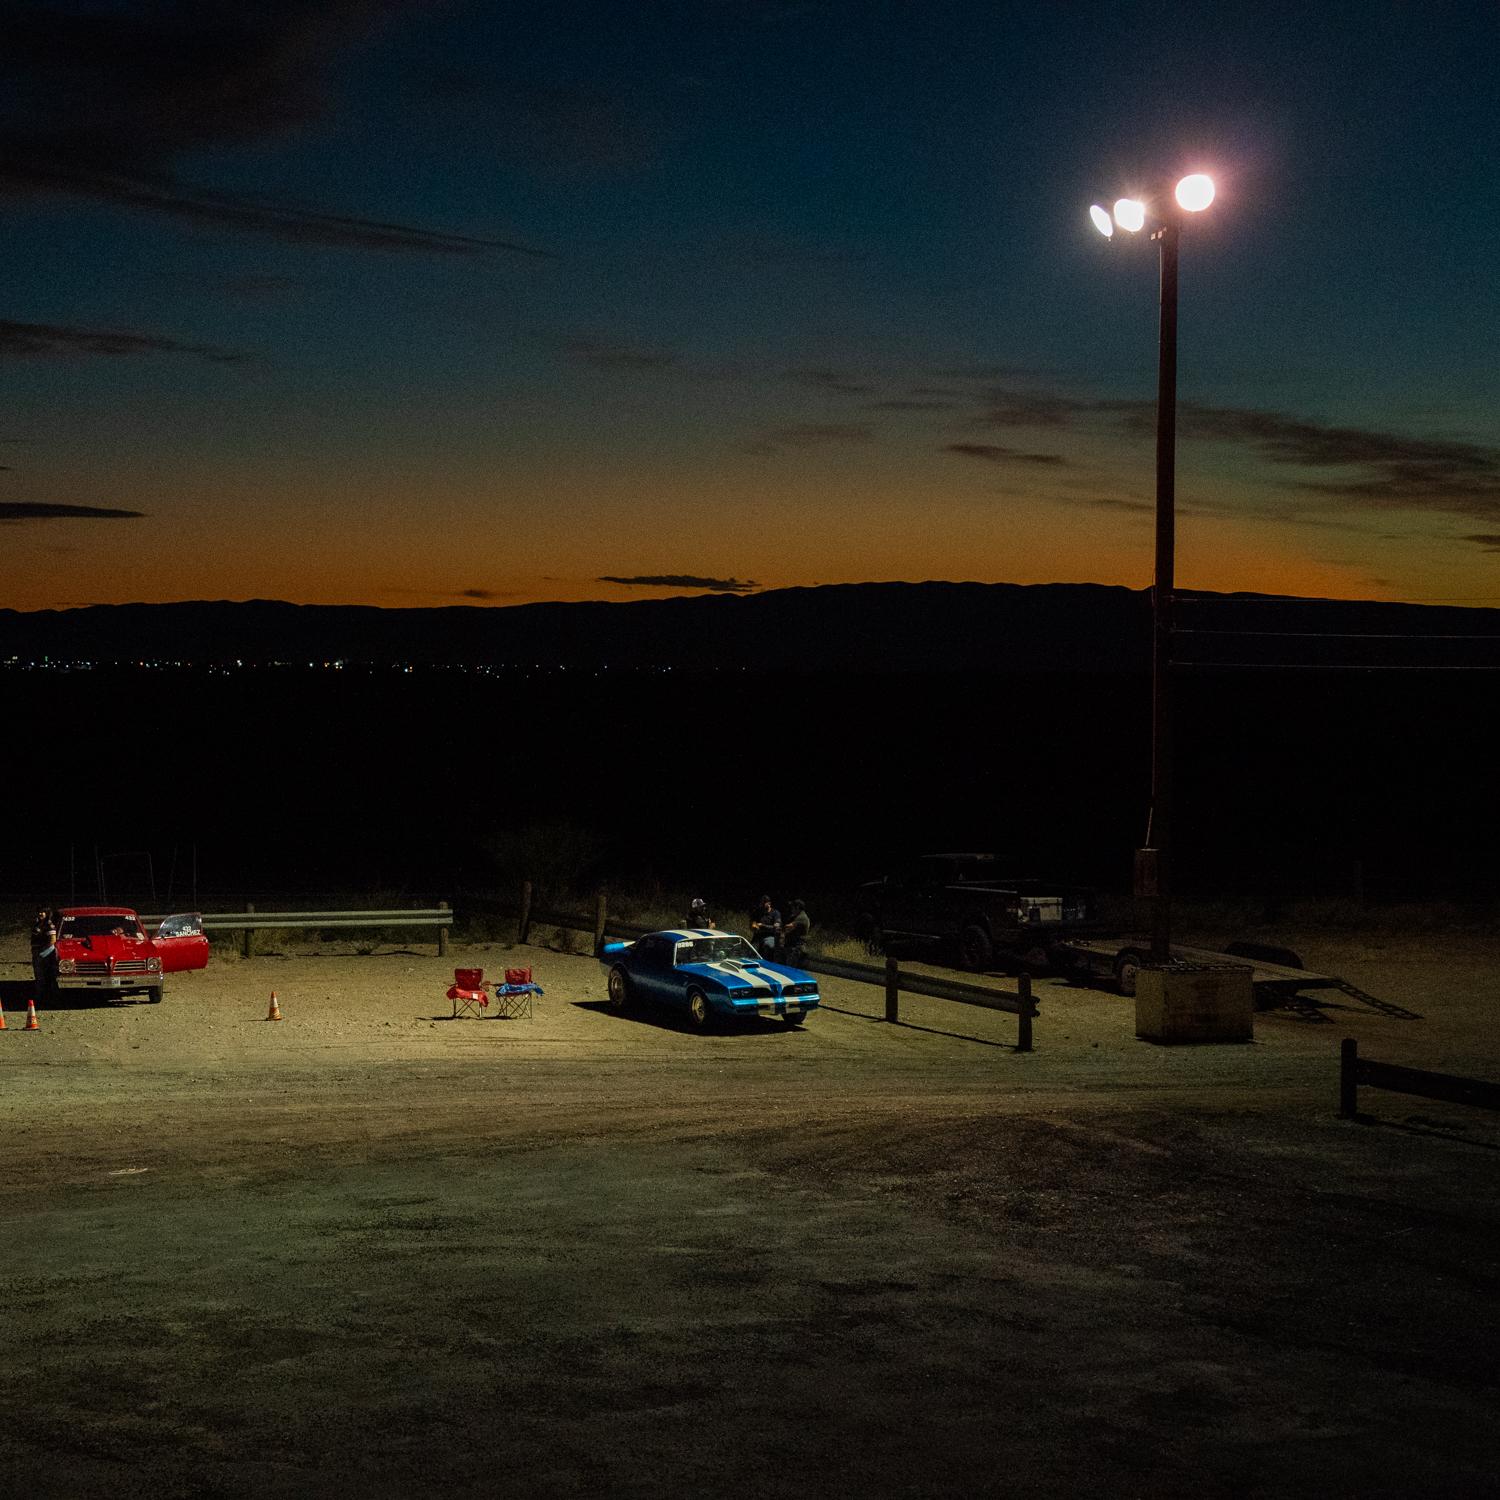 Brian Finke Color Photograph - Untitled (Presidio Drag Racing) 